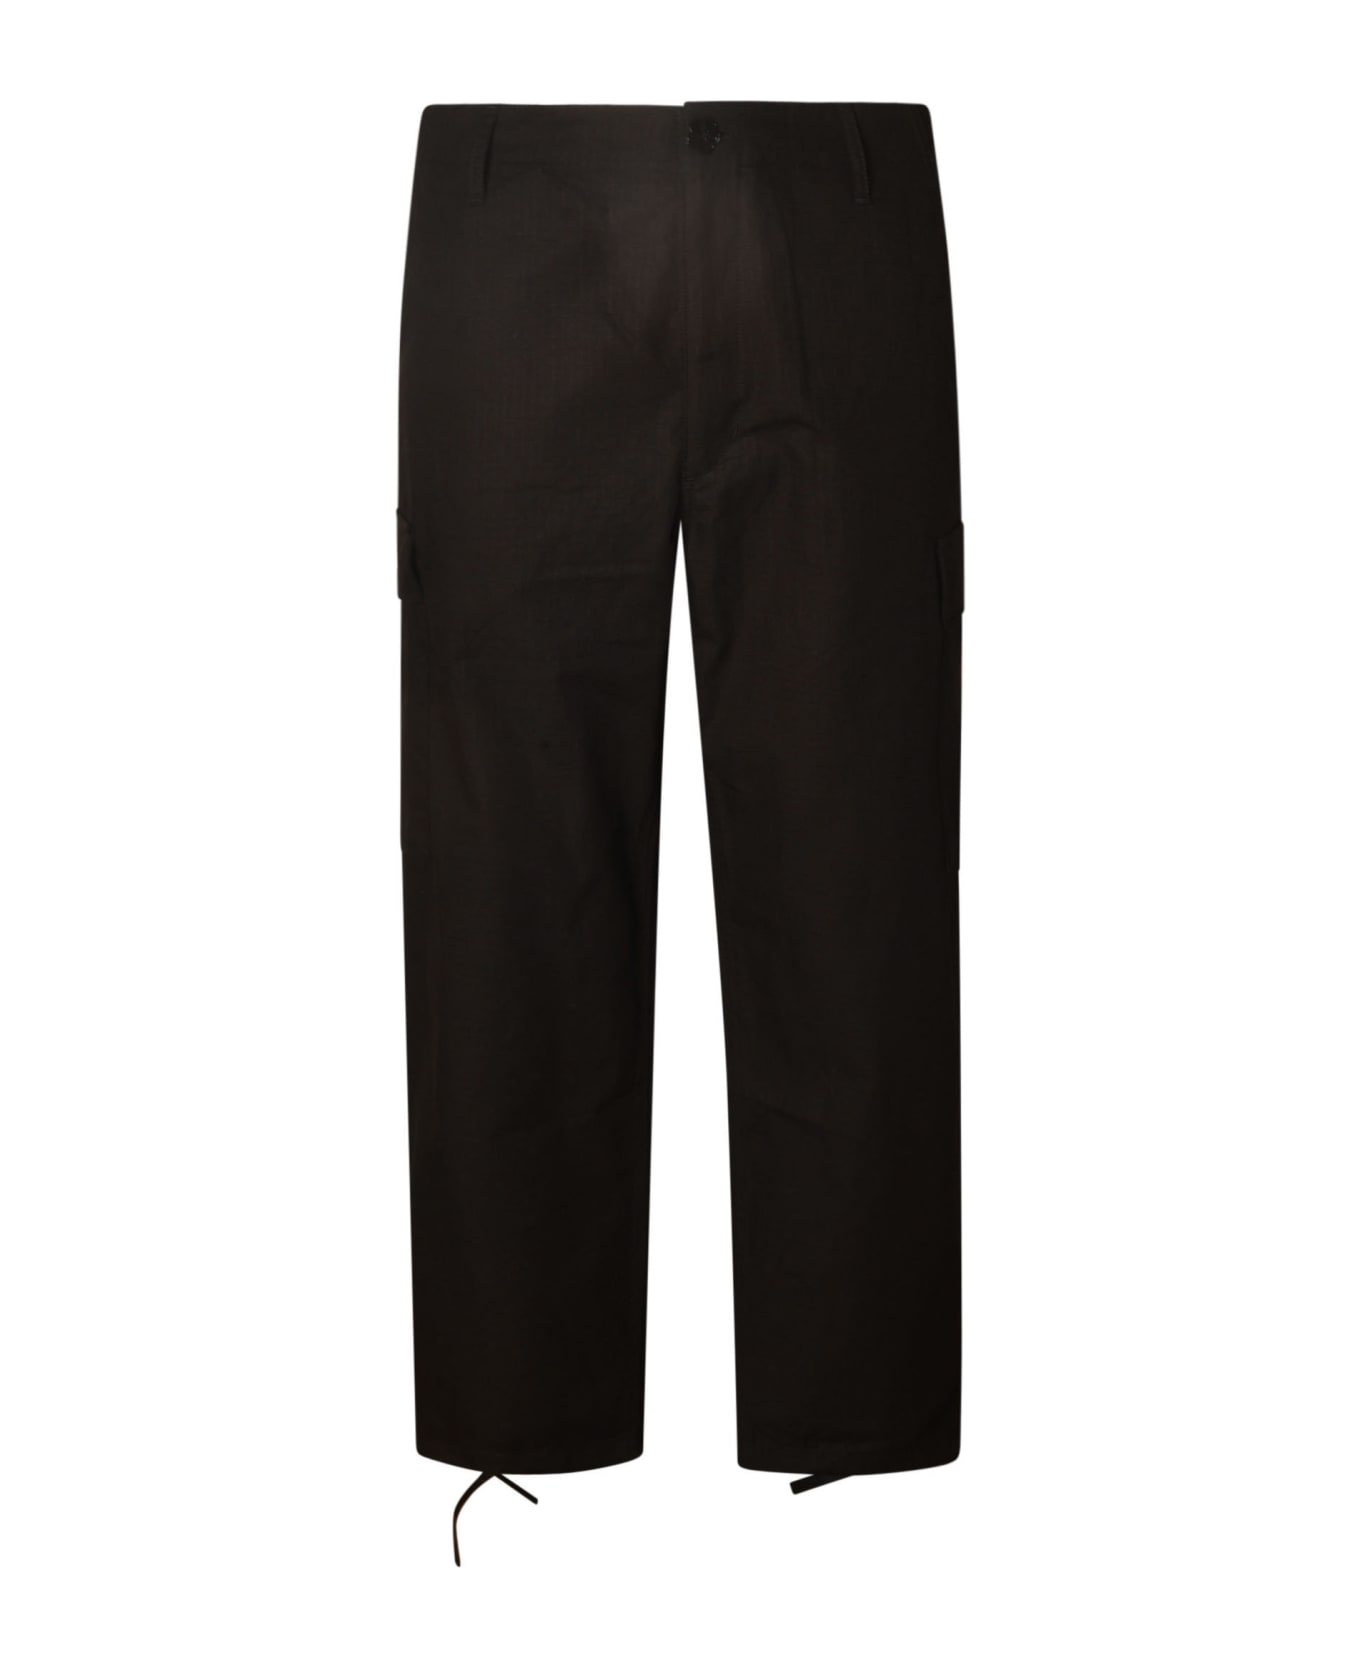 Kenzo Workwear Cargo Pants - Black ボトムス